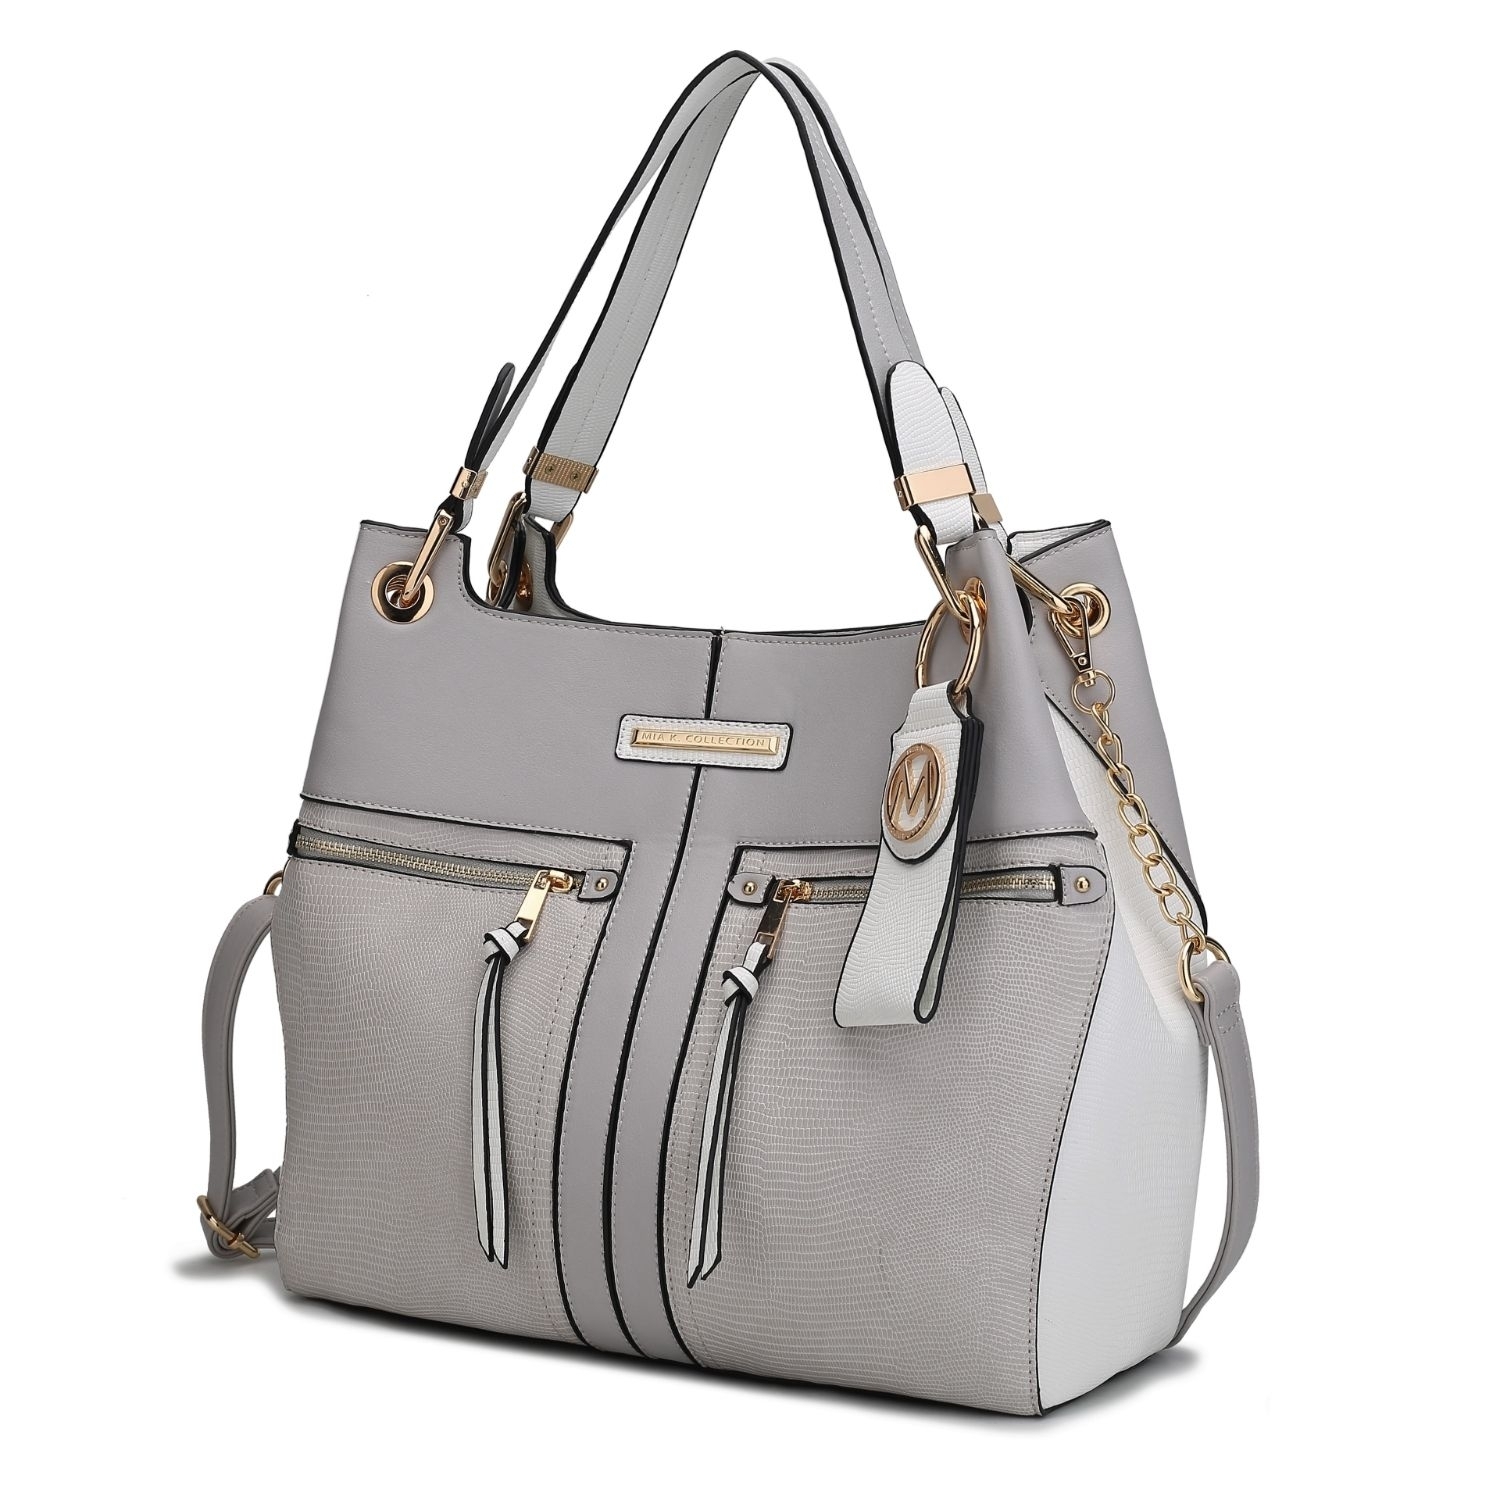 MKF Collection Sofia Tote 2 Pcs Handbag With Keyring By Mia K. - Light Gray